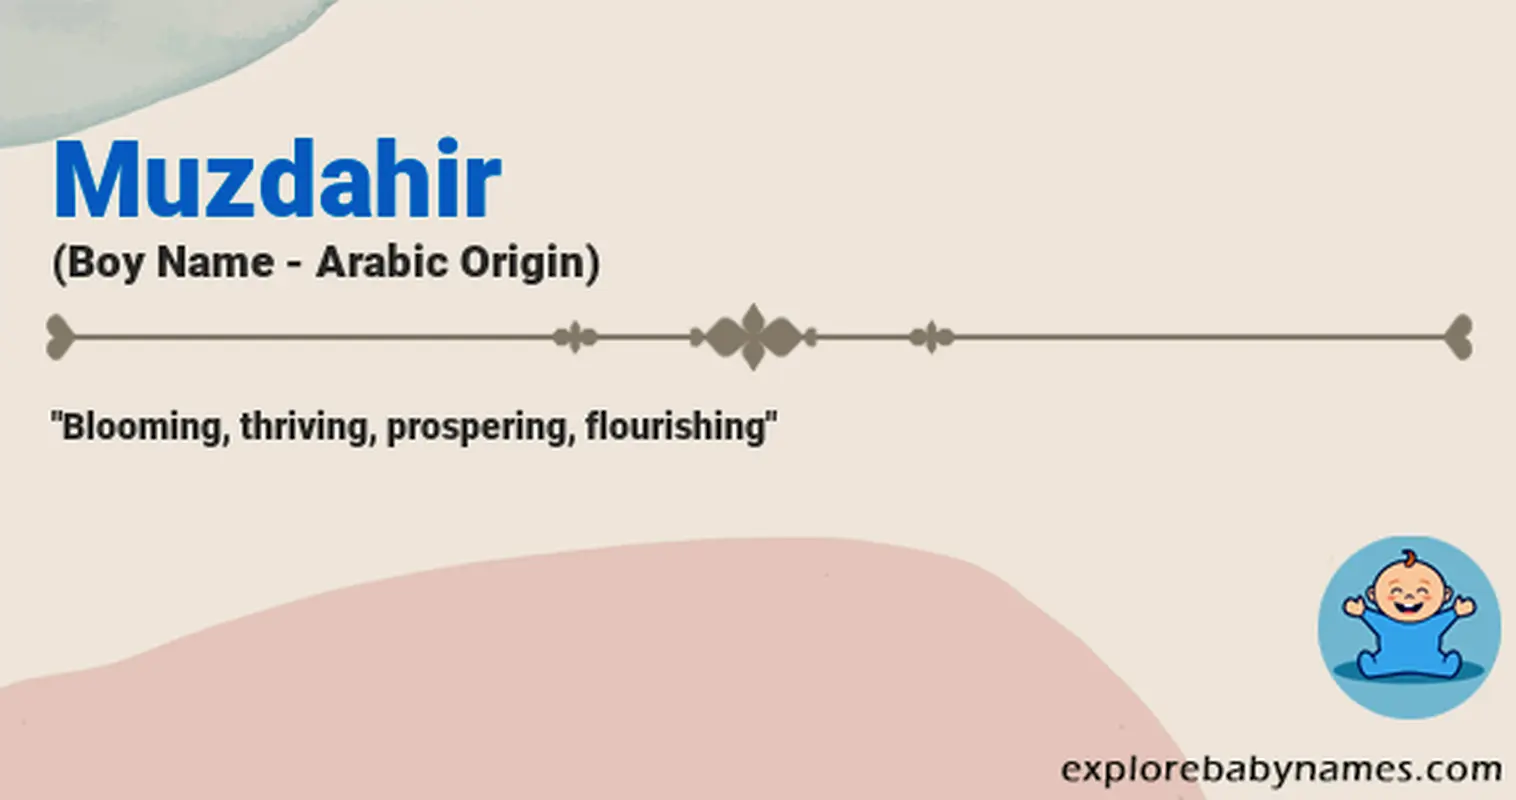 Meaning of Muzdahir